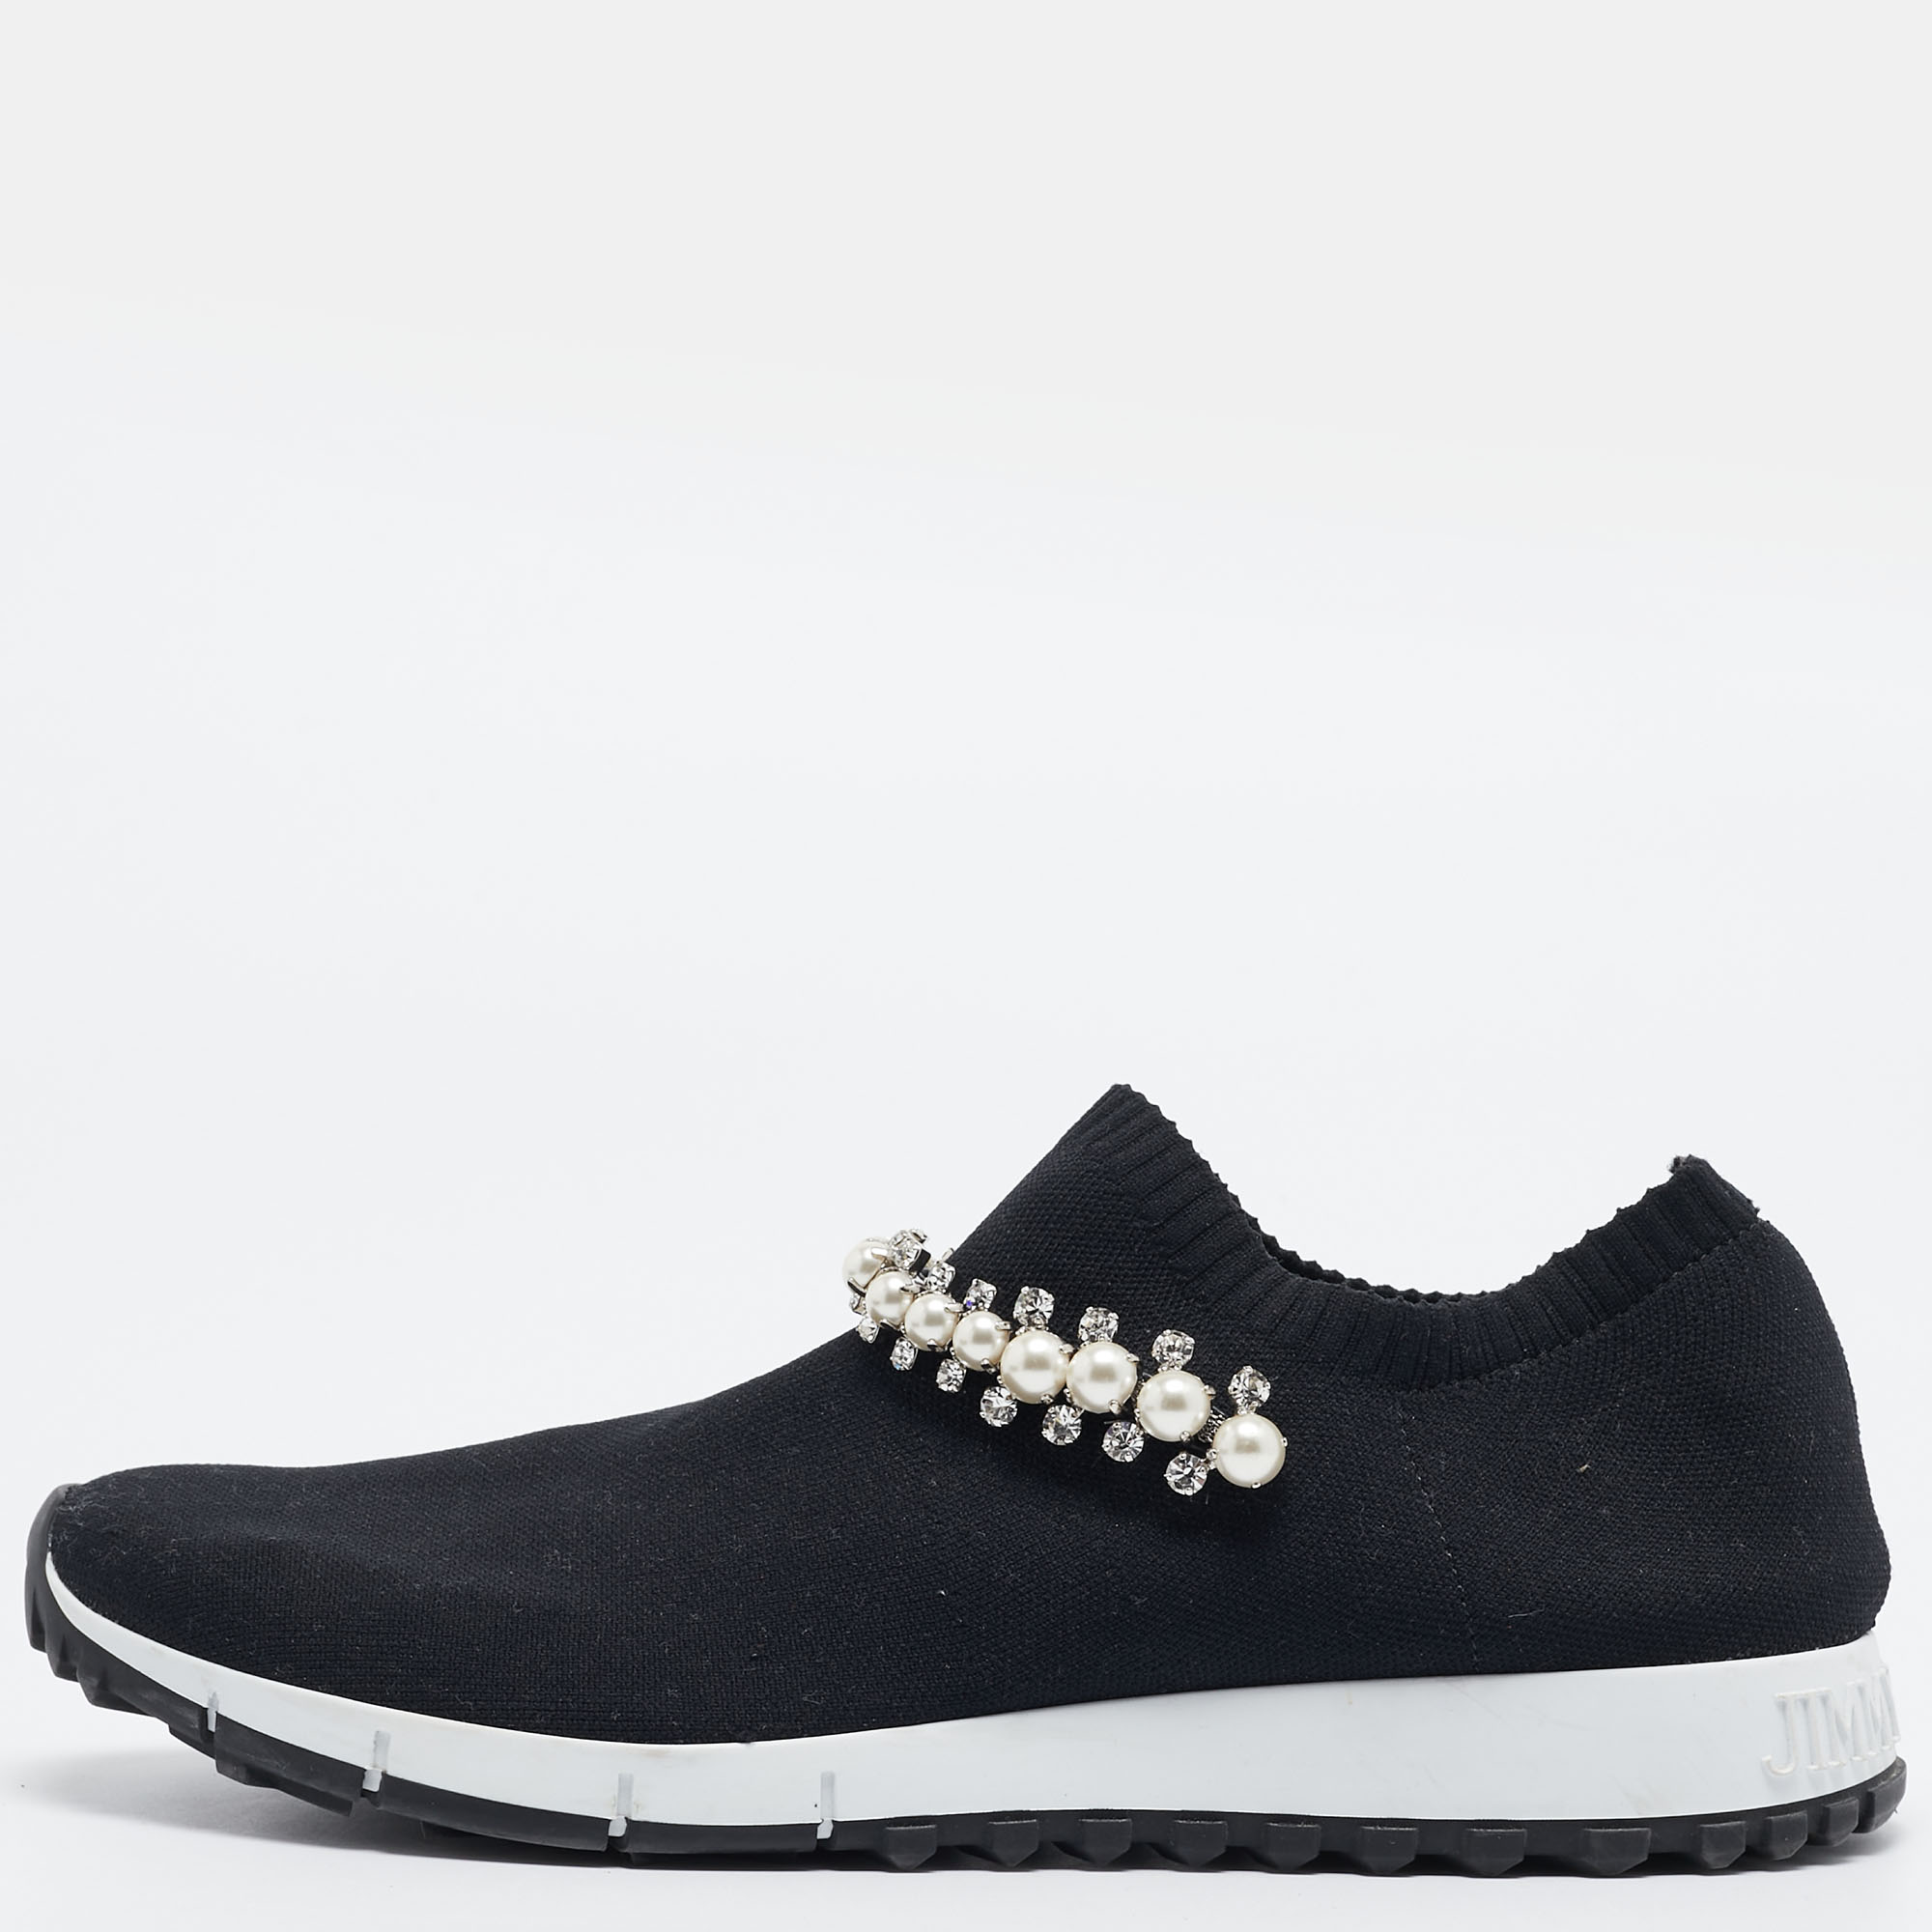 Jimmy choo black knit fabric crystal embellished verona sneakers size 39